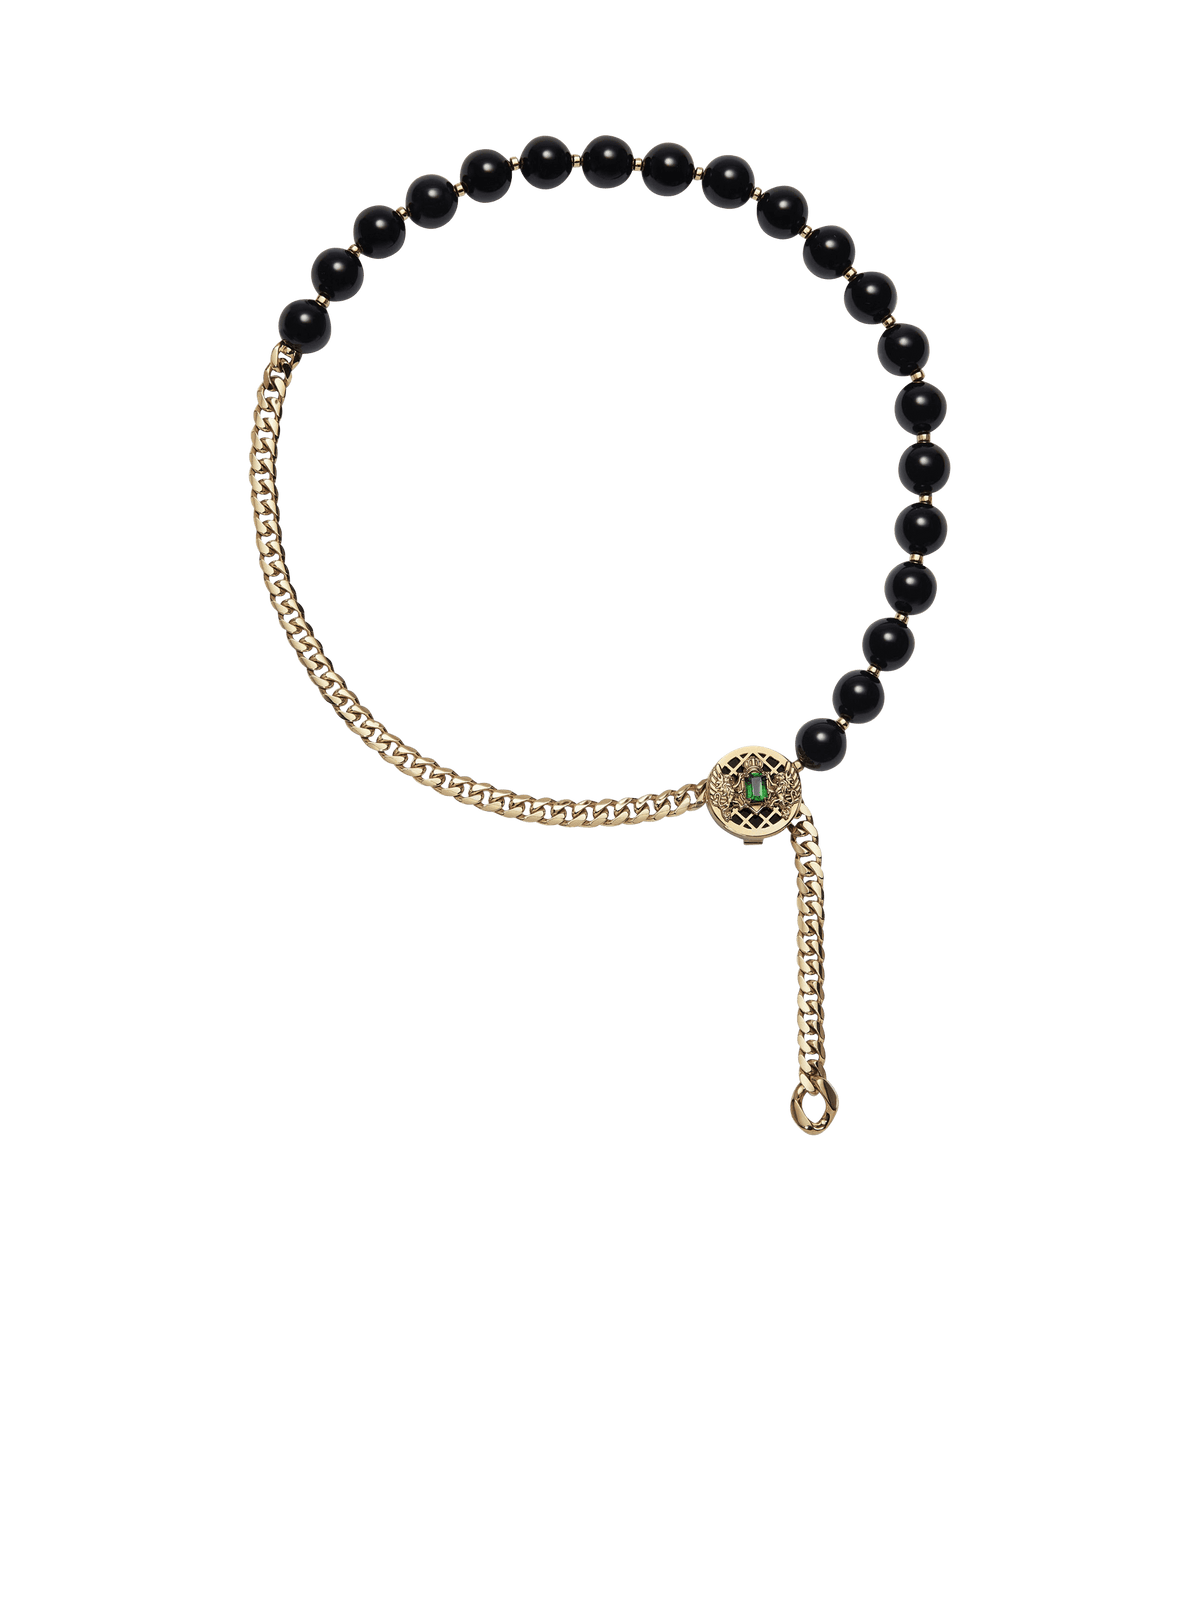 Emblem Beads Necklace